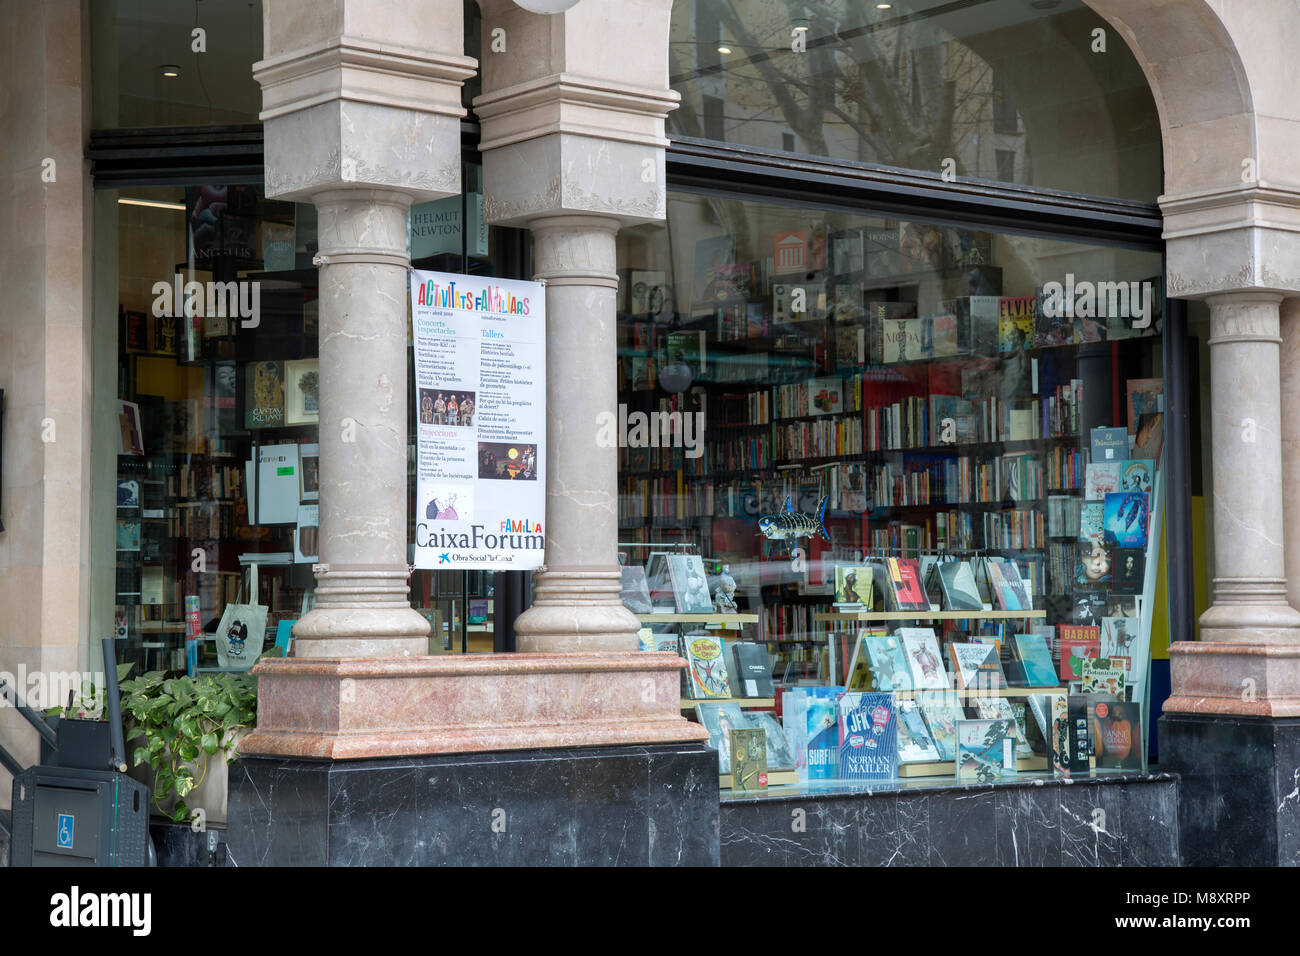 Bookshop at Caixa Forum, Grand Hotel; Palma; Majorca; Spain Stock Photo -  Alamy